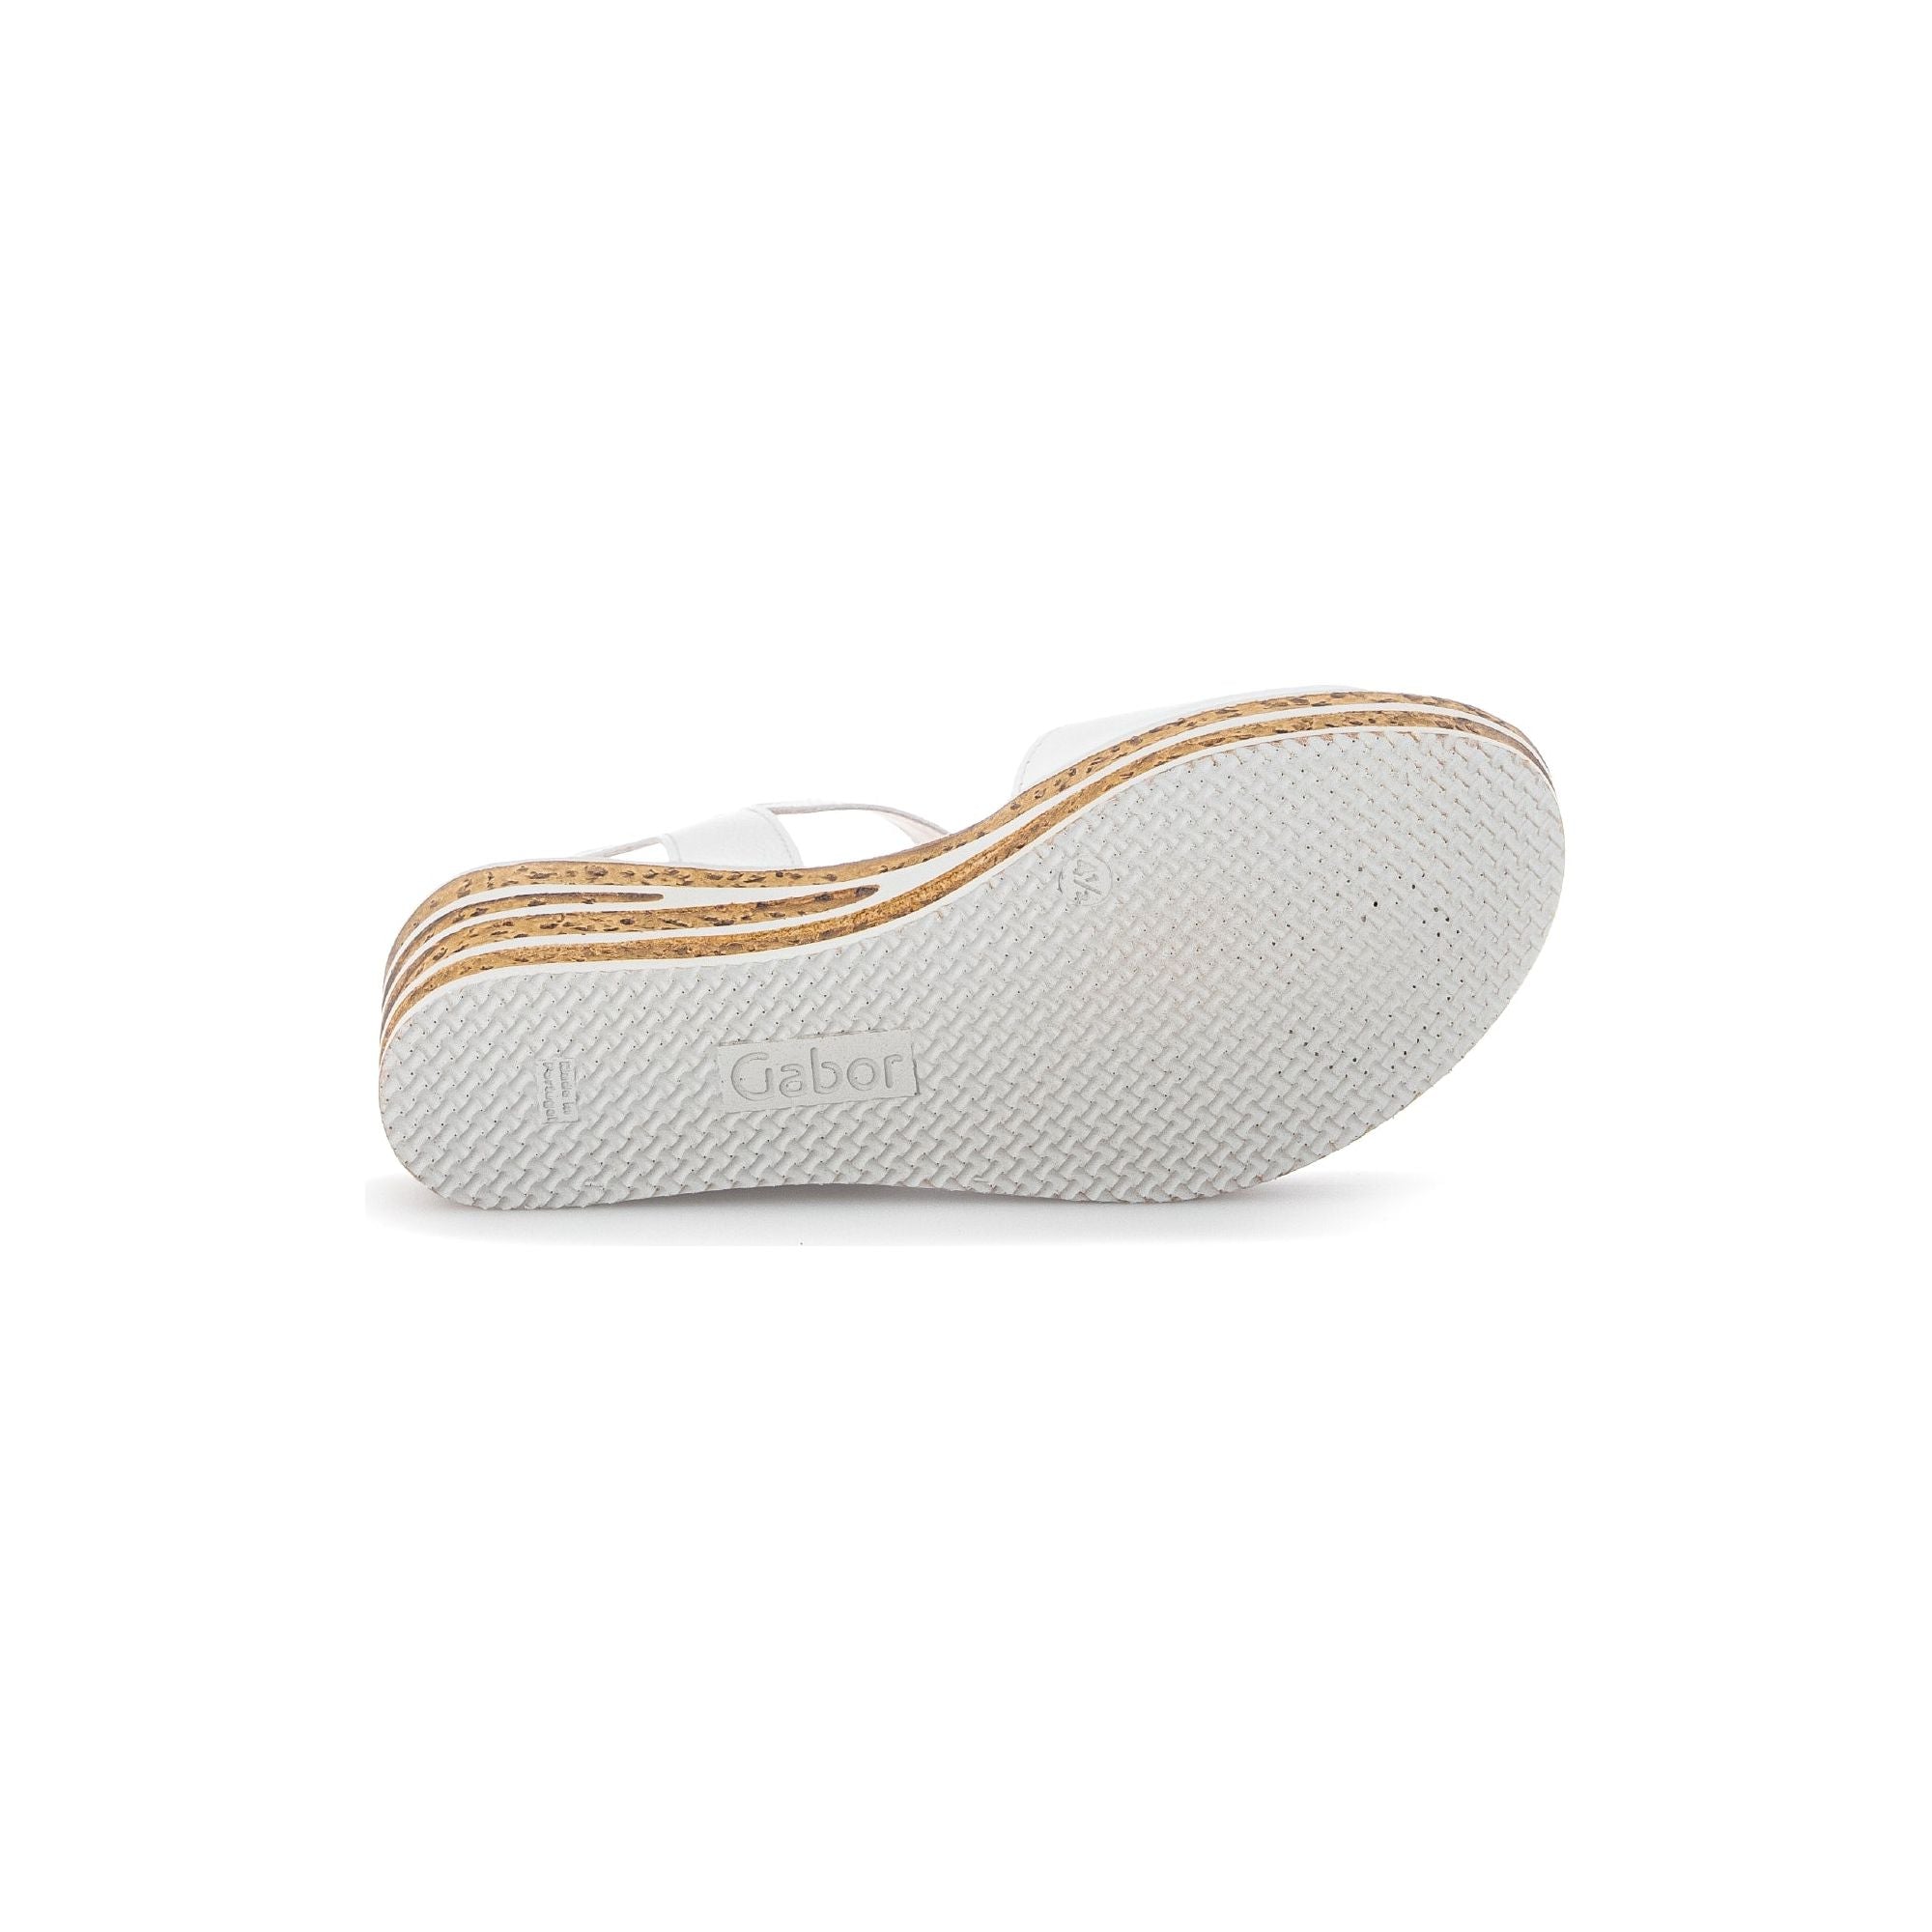 Gabor Twirl (44.651.21)- Ladies Wedge Sandal In White Leather. Gabor Shoes | Wisemans | Bantry | Shoe Shop | West Cork | Ireland